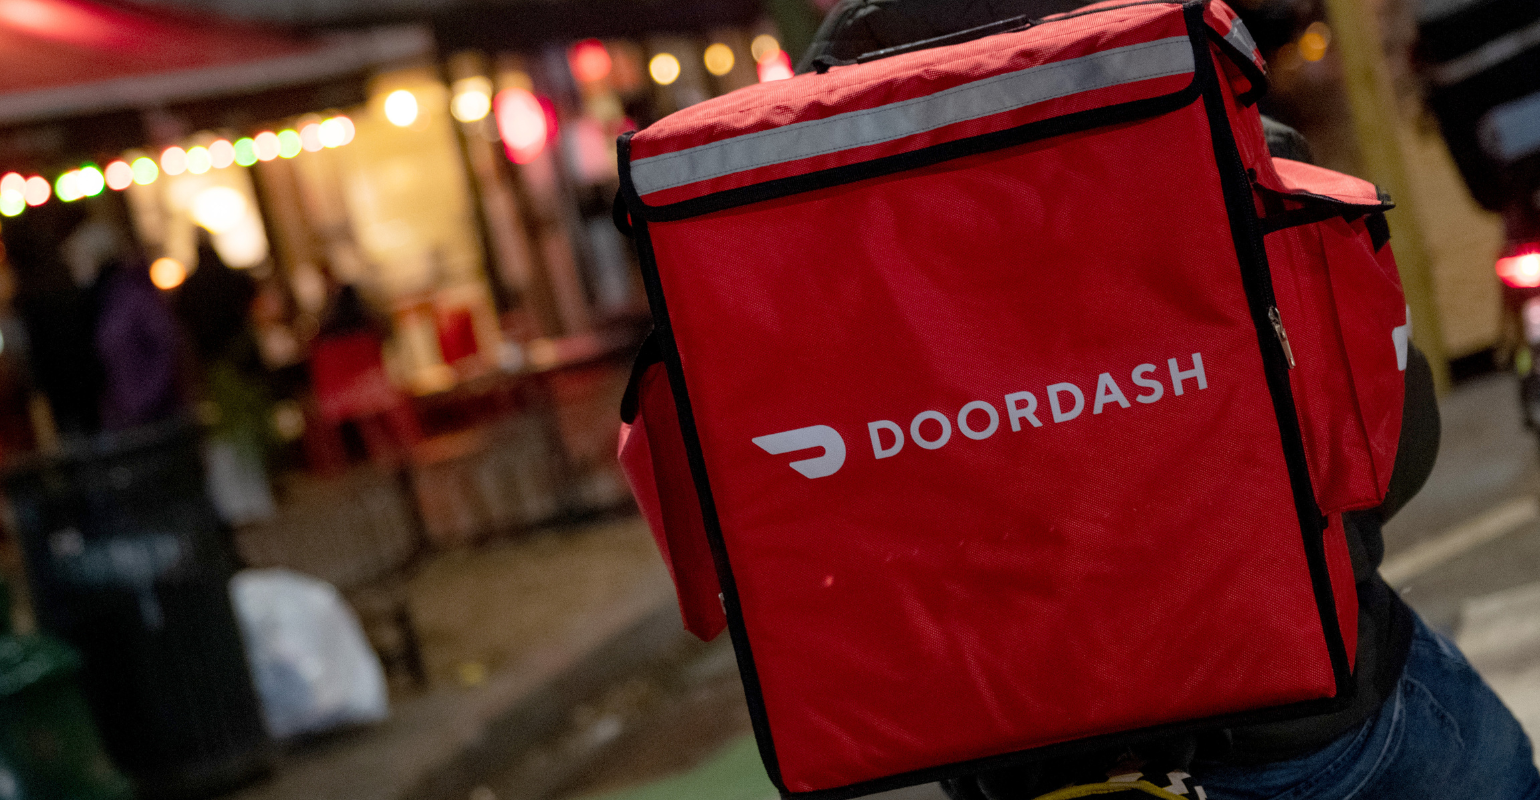 DoorDash introduces new portable health benefits program in Pennsylvania